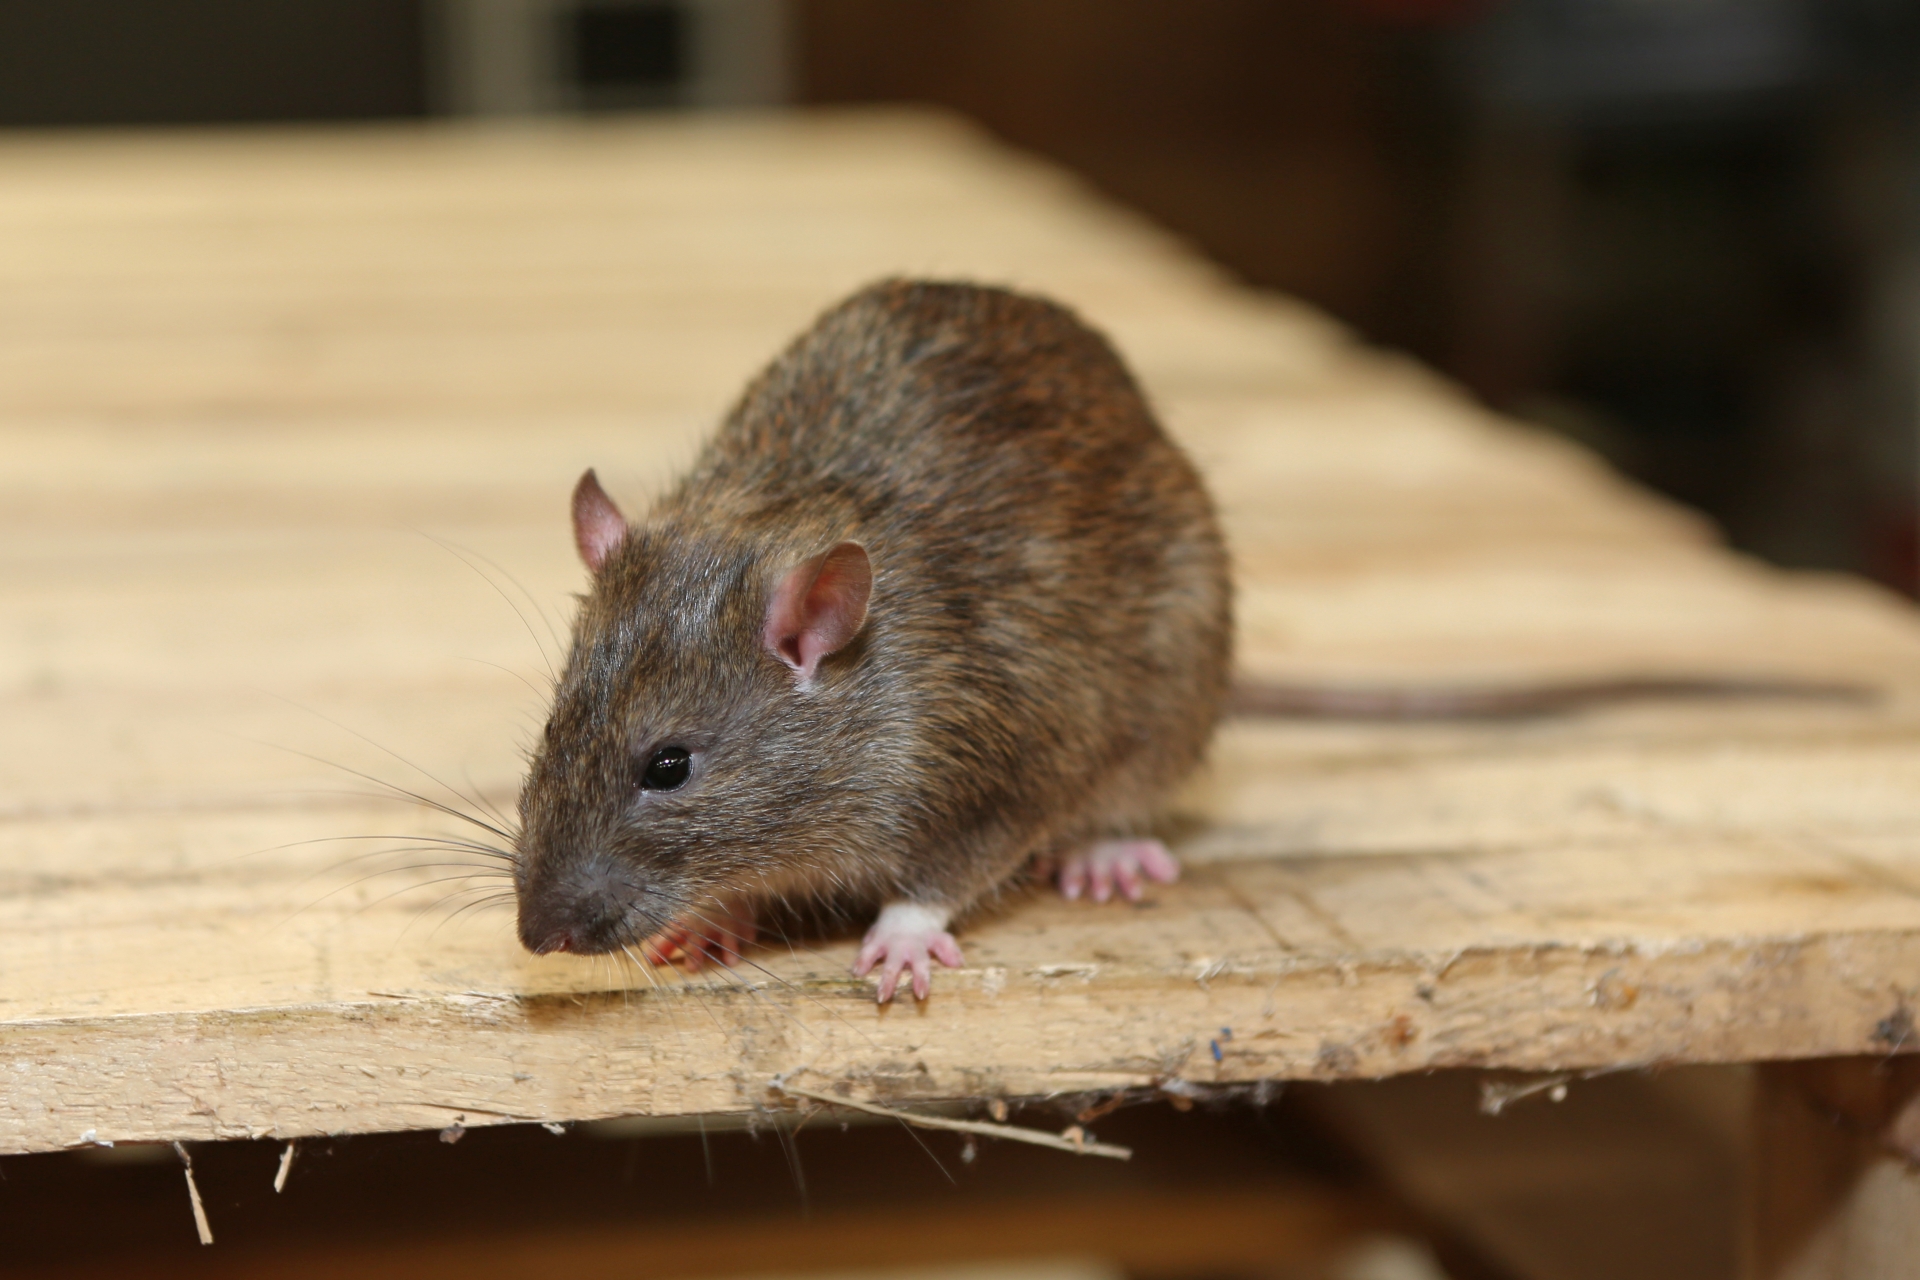 Rat extermination, Pest Control in Brompton, SW3. Call Now 020 8166 9746